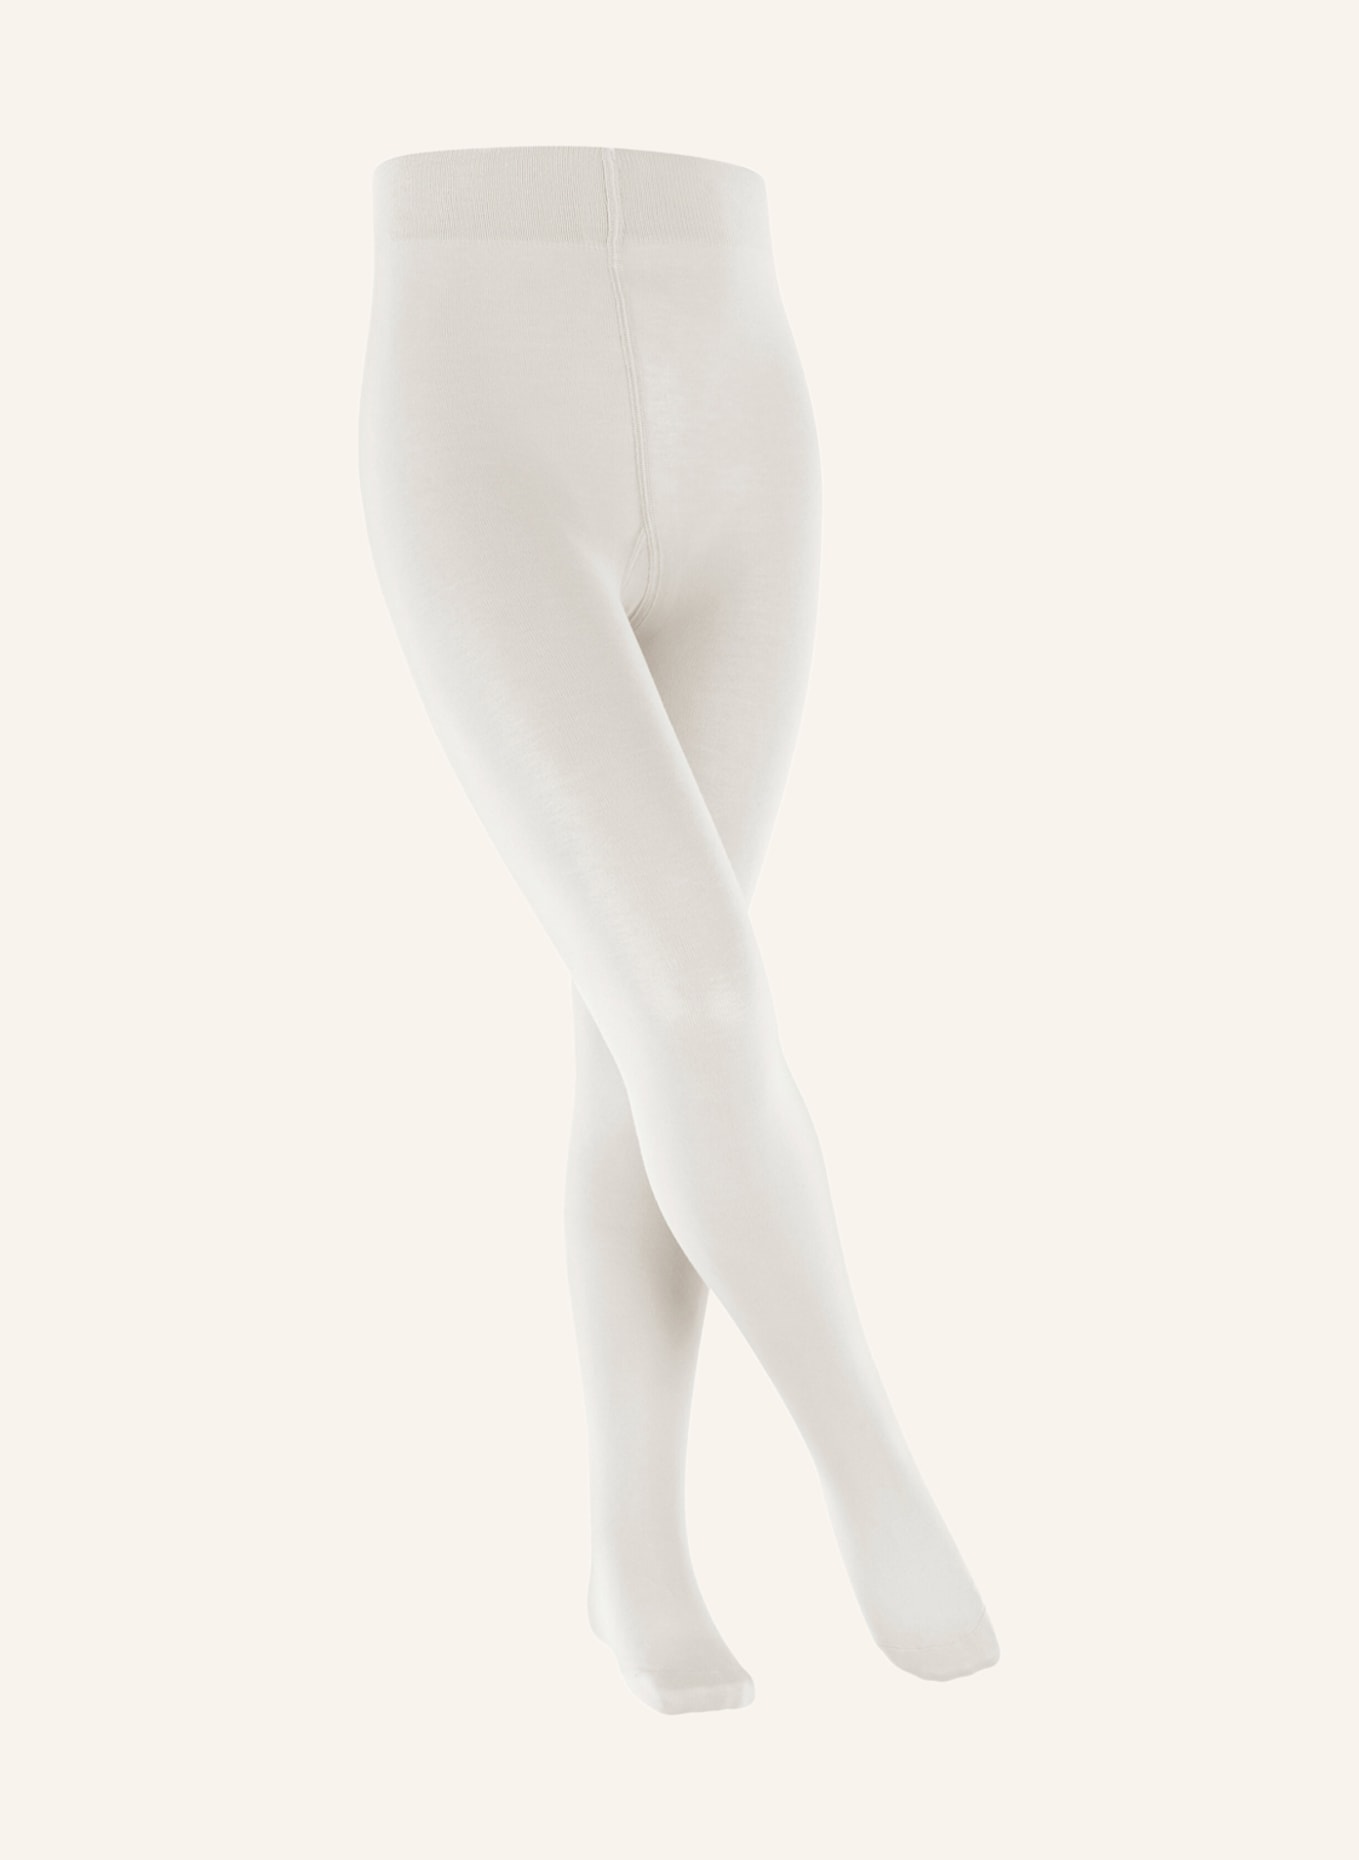 FALKE Strumpfhose COTTON TOUCH, Farbe: 2040 off-white (Bild 1)